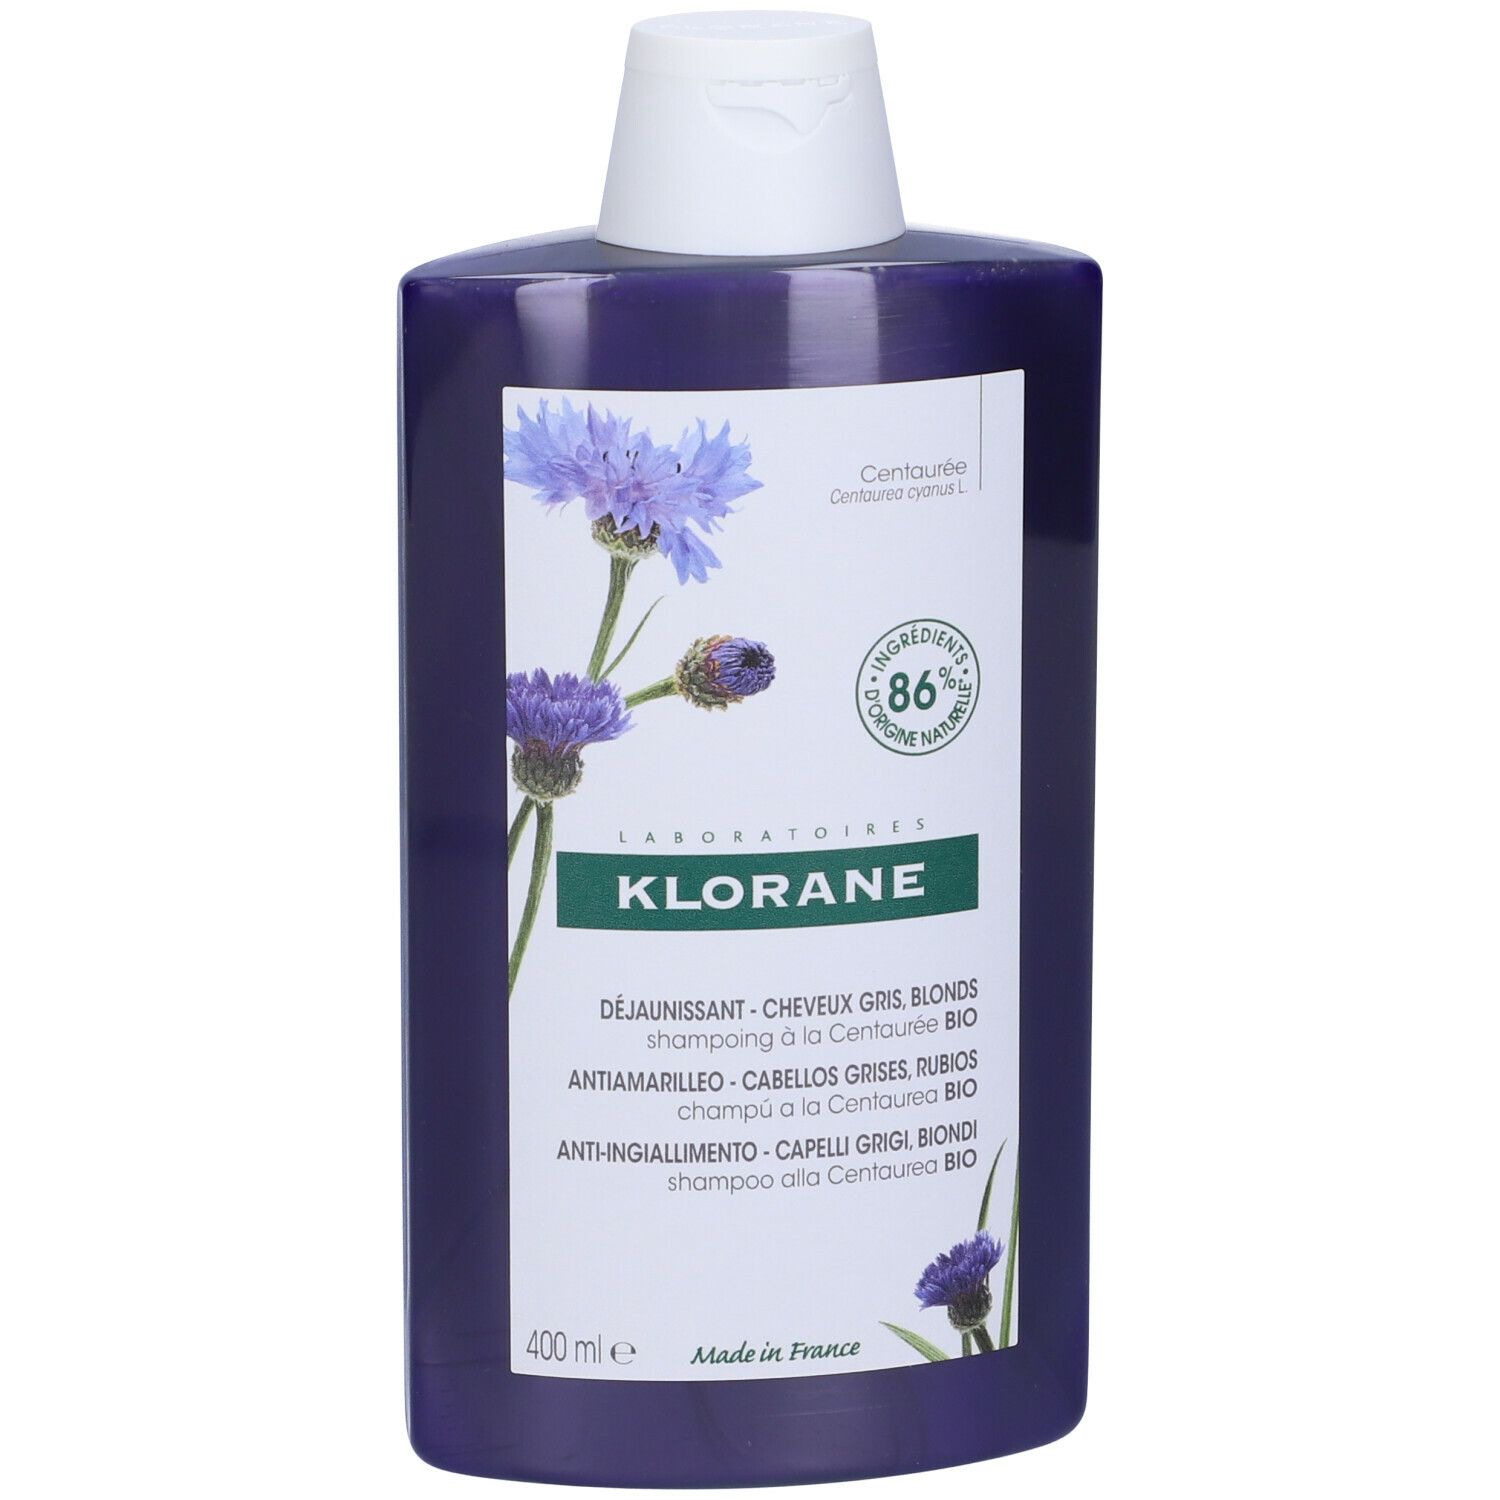 KLORANE Shampoo alla Centaurea BIO Anti-ingiallimento